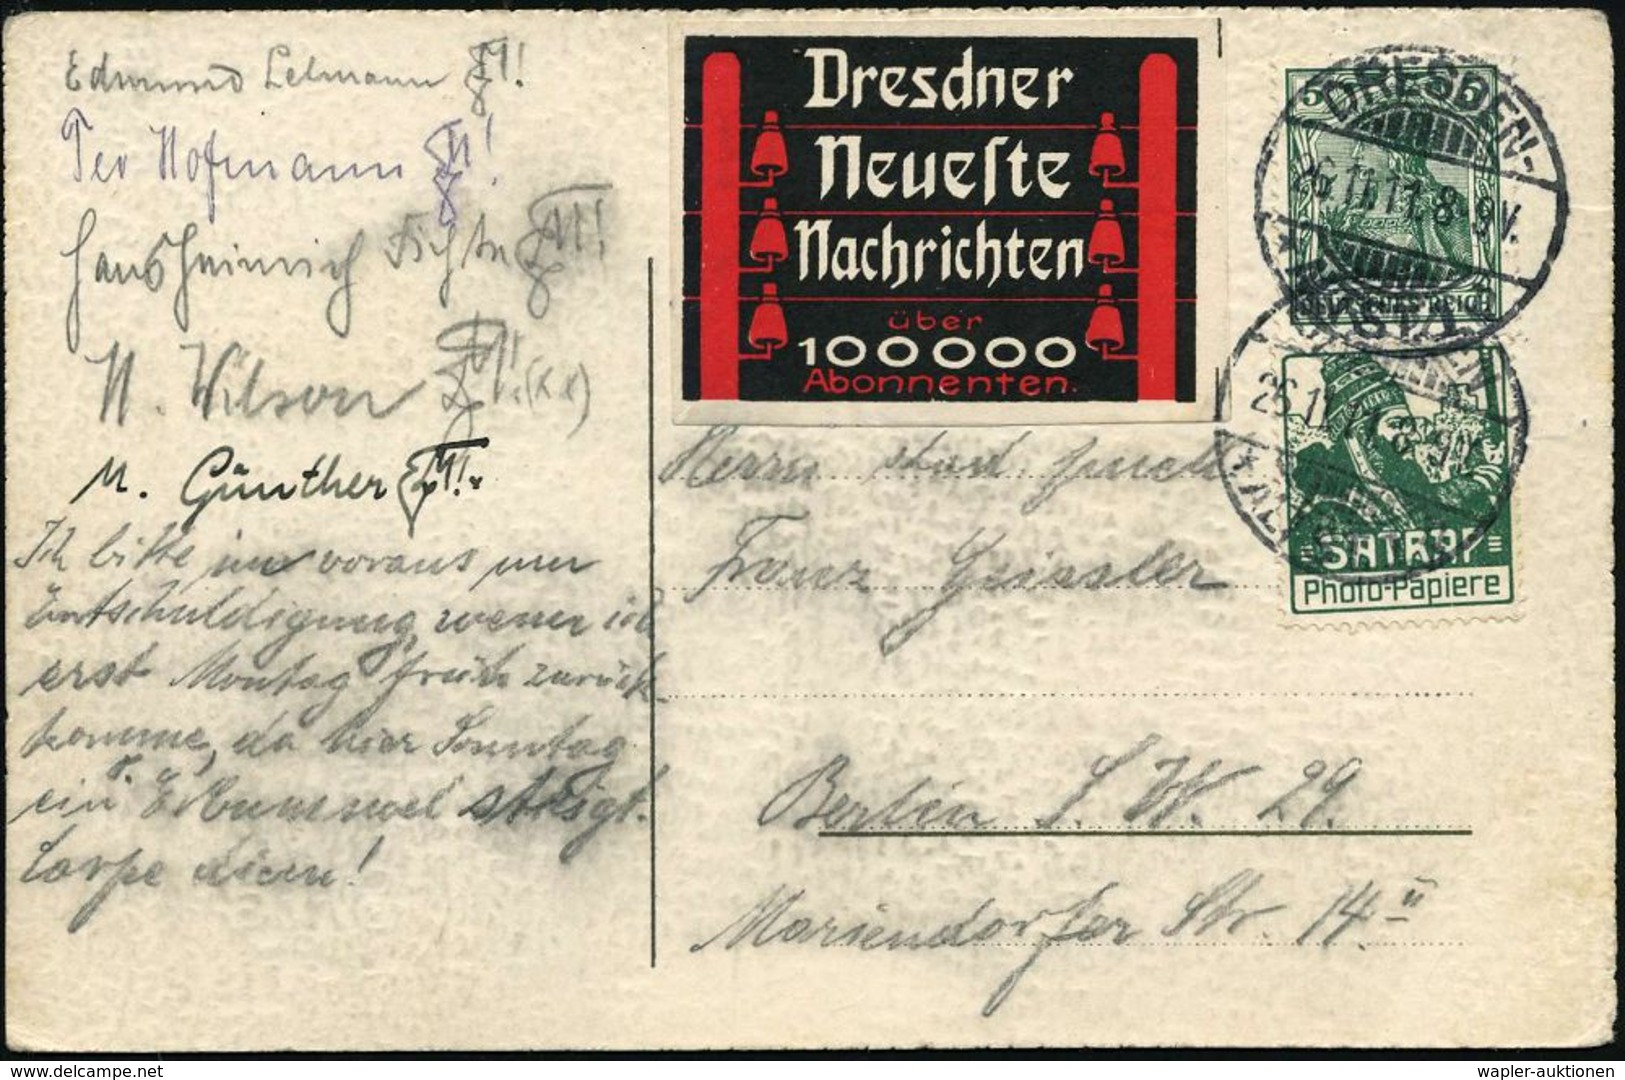 Dresden-Altst. 1 1911 (26.11.) 5 Pf. Germania U. Reklame-Zierfeld "SATRAP"- Foto-Papiere, Gr. Kopf (lose Darunter, Zusam - Egittologia